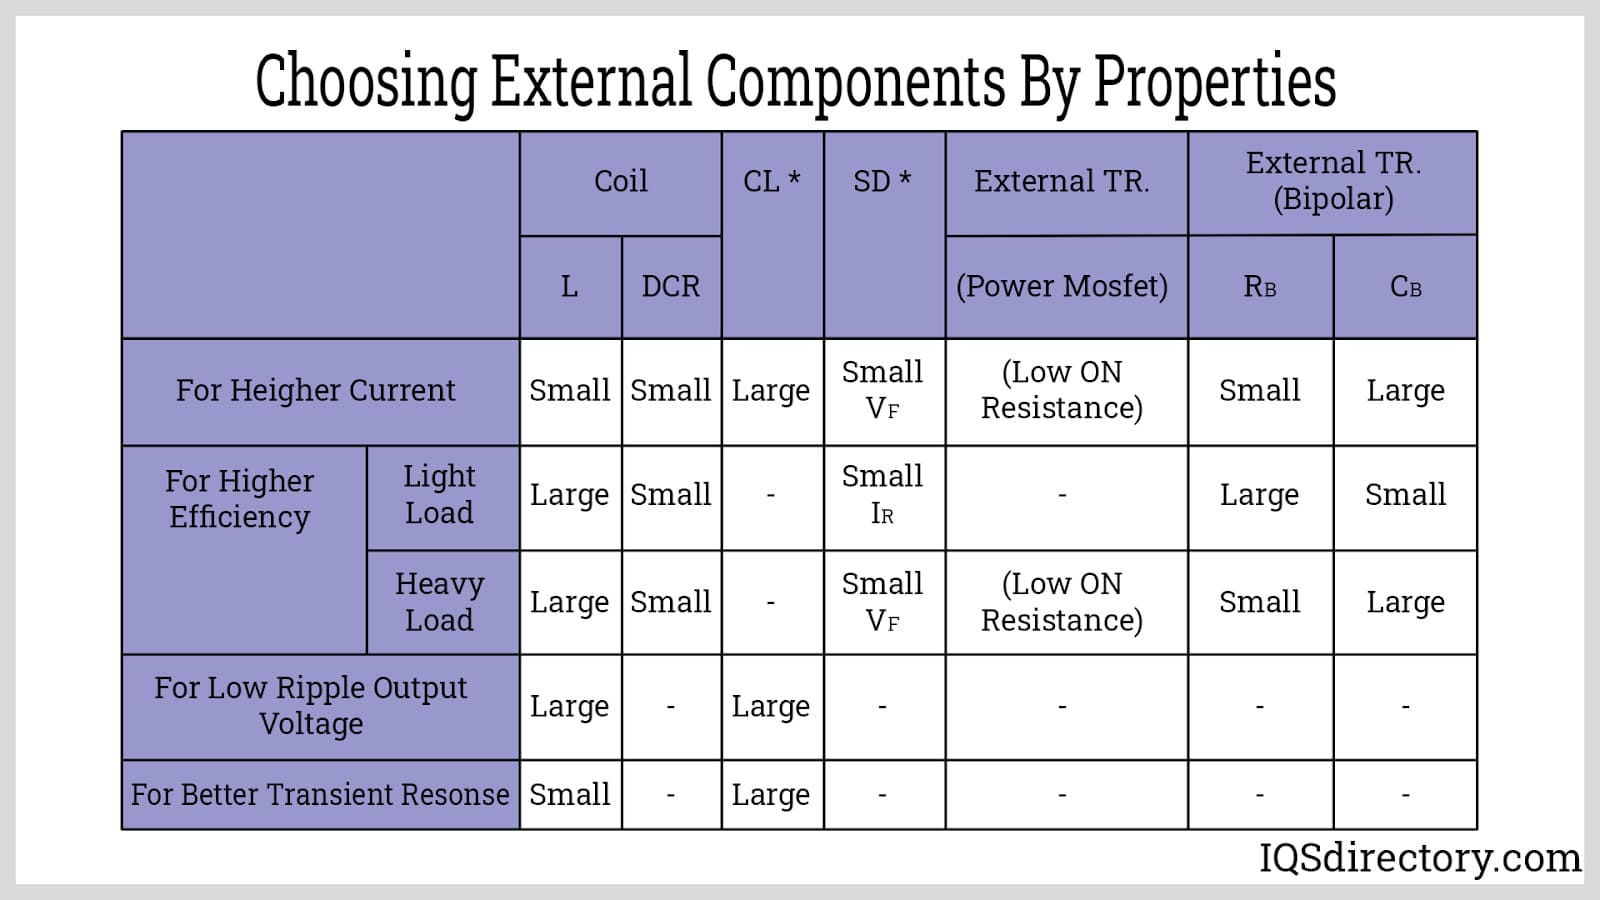 Choosing external components by properties